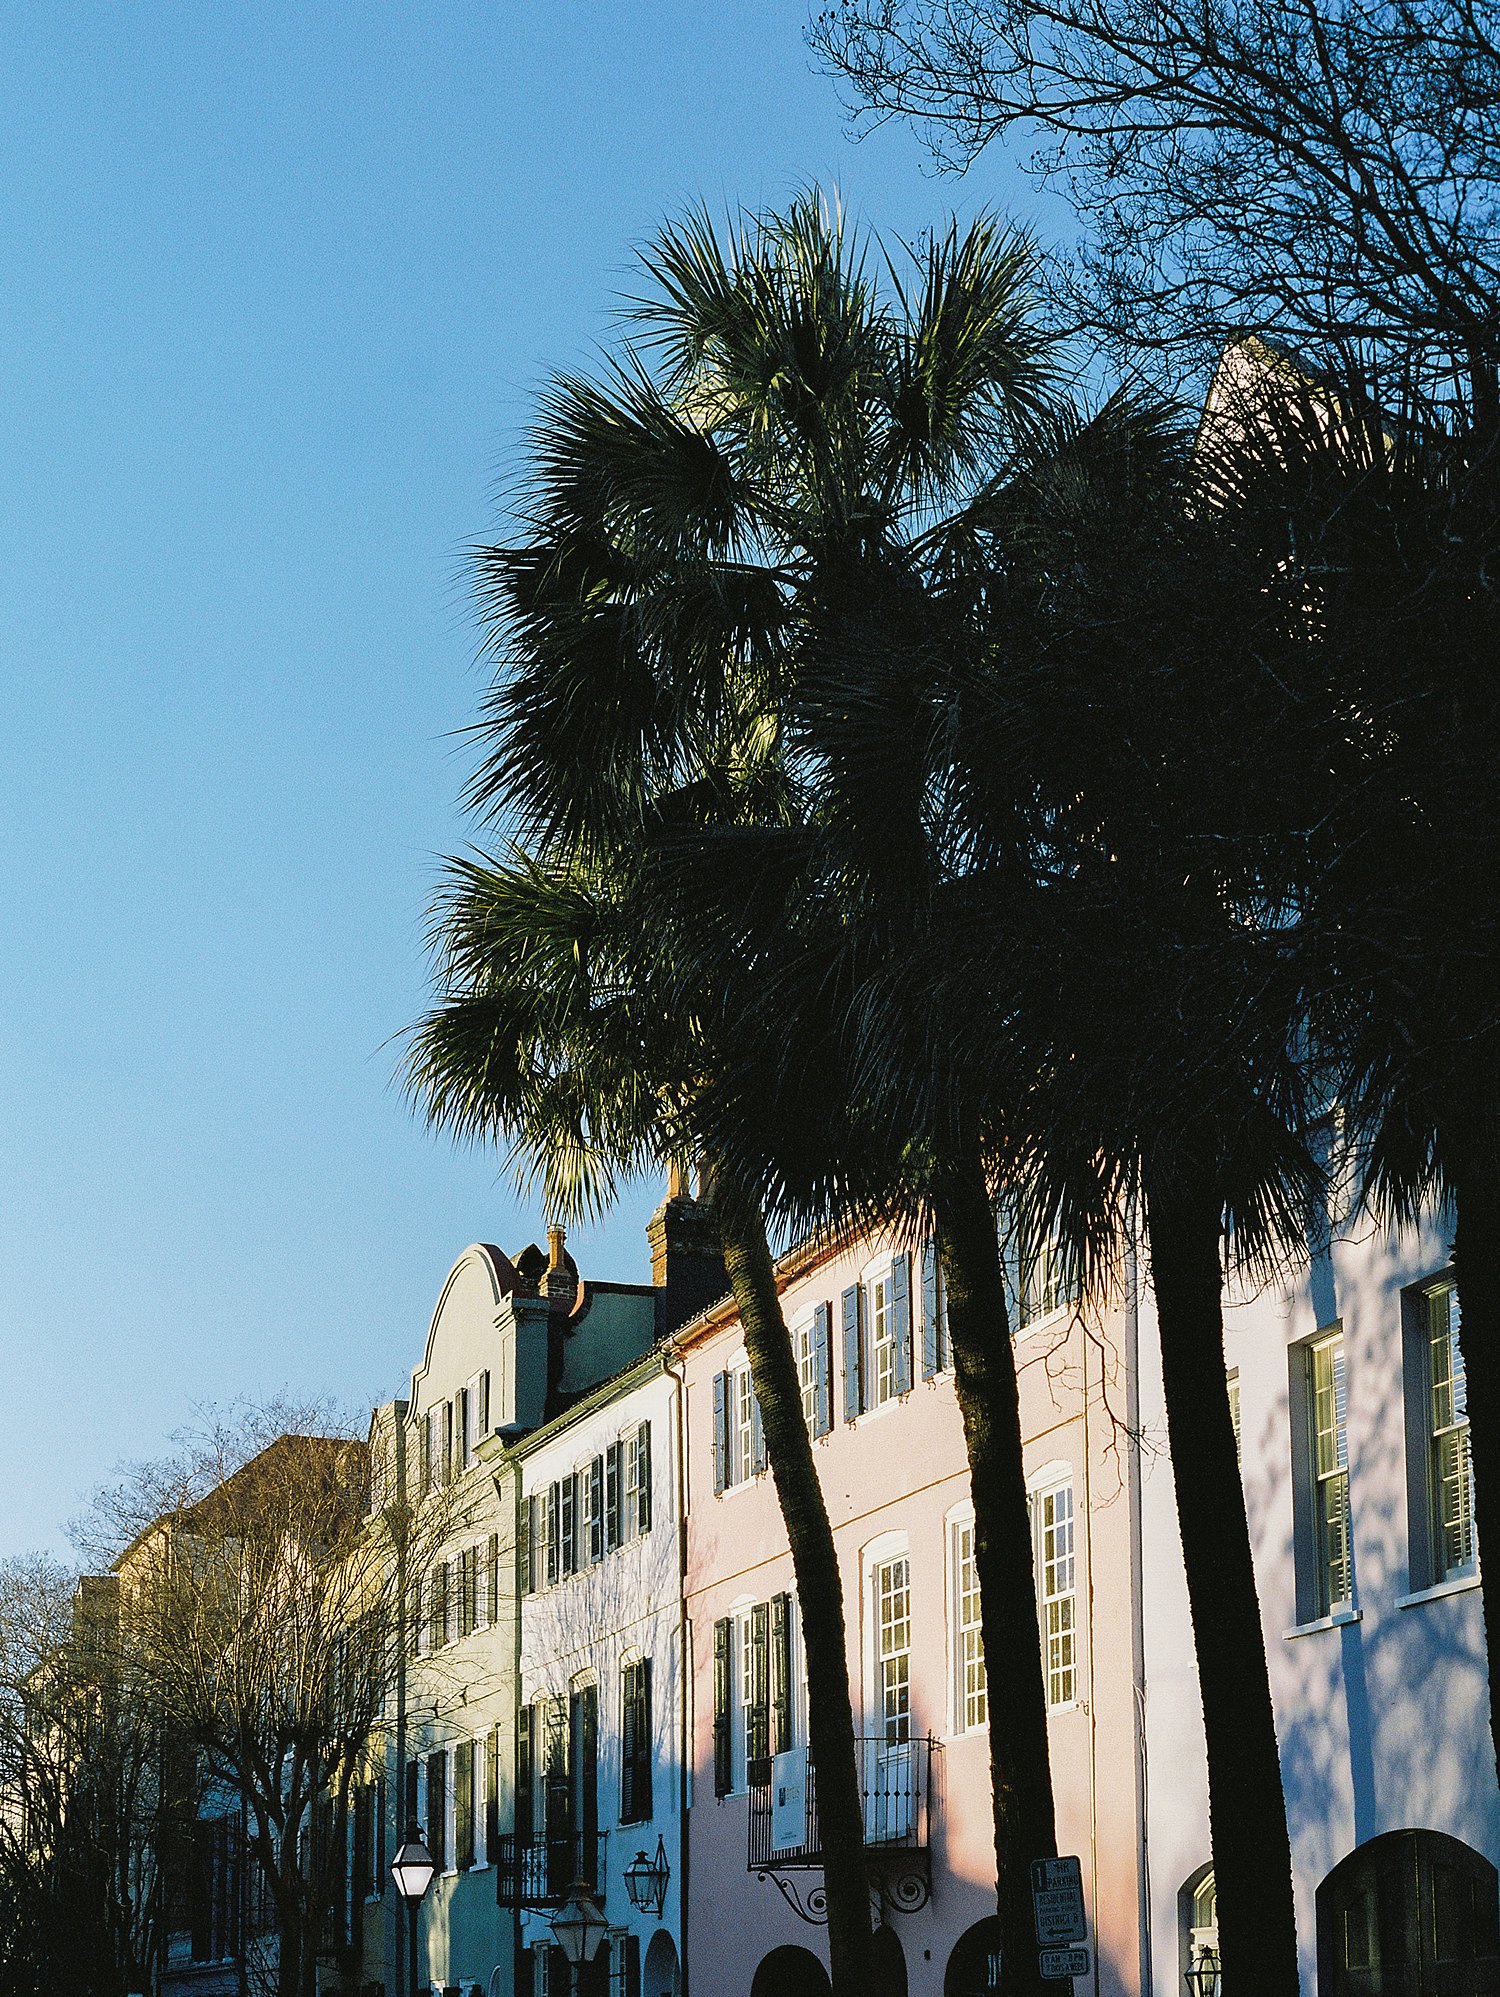 Rainbow row buildings behind palm trees in Charleston South Carolina